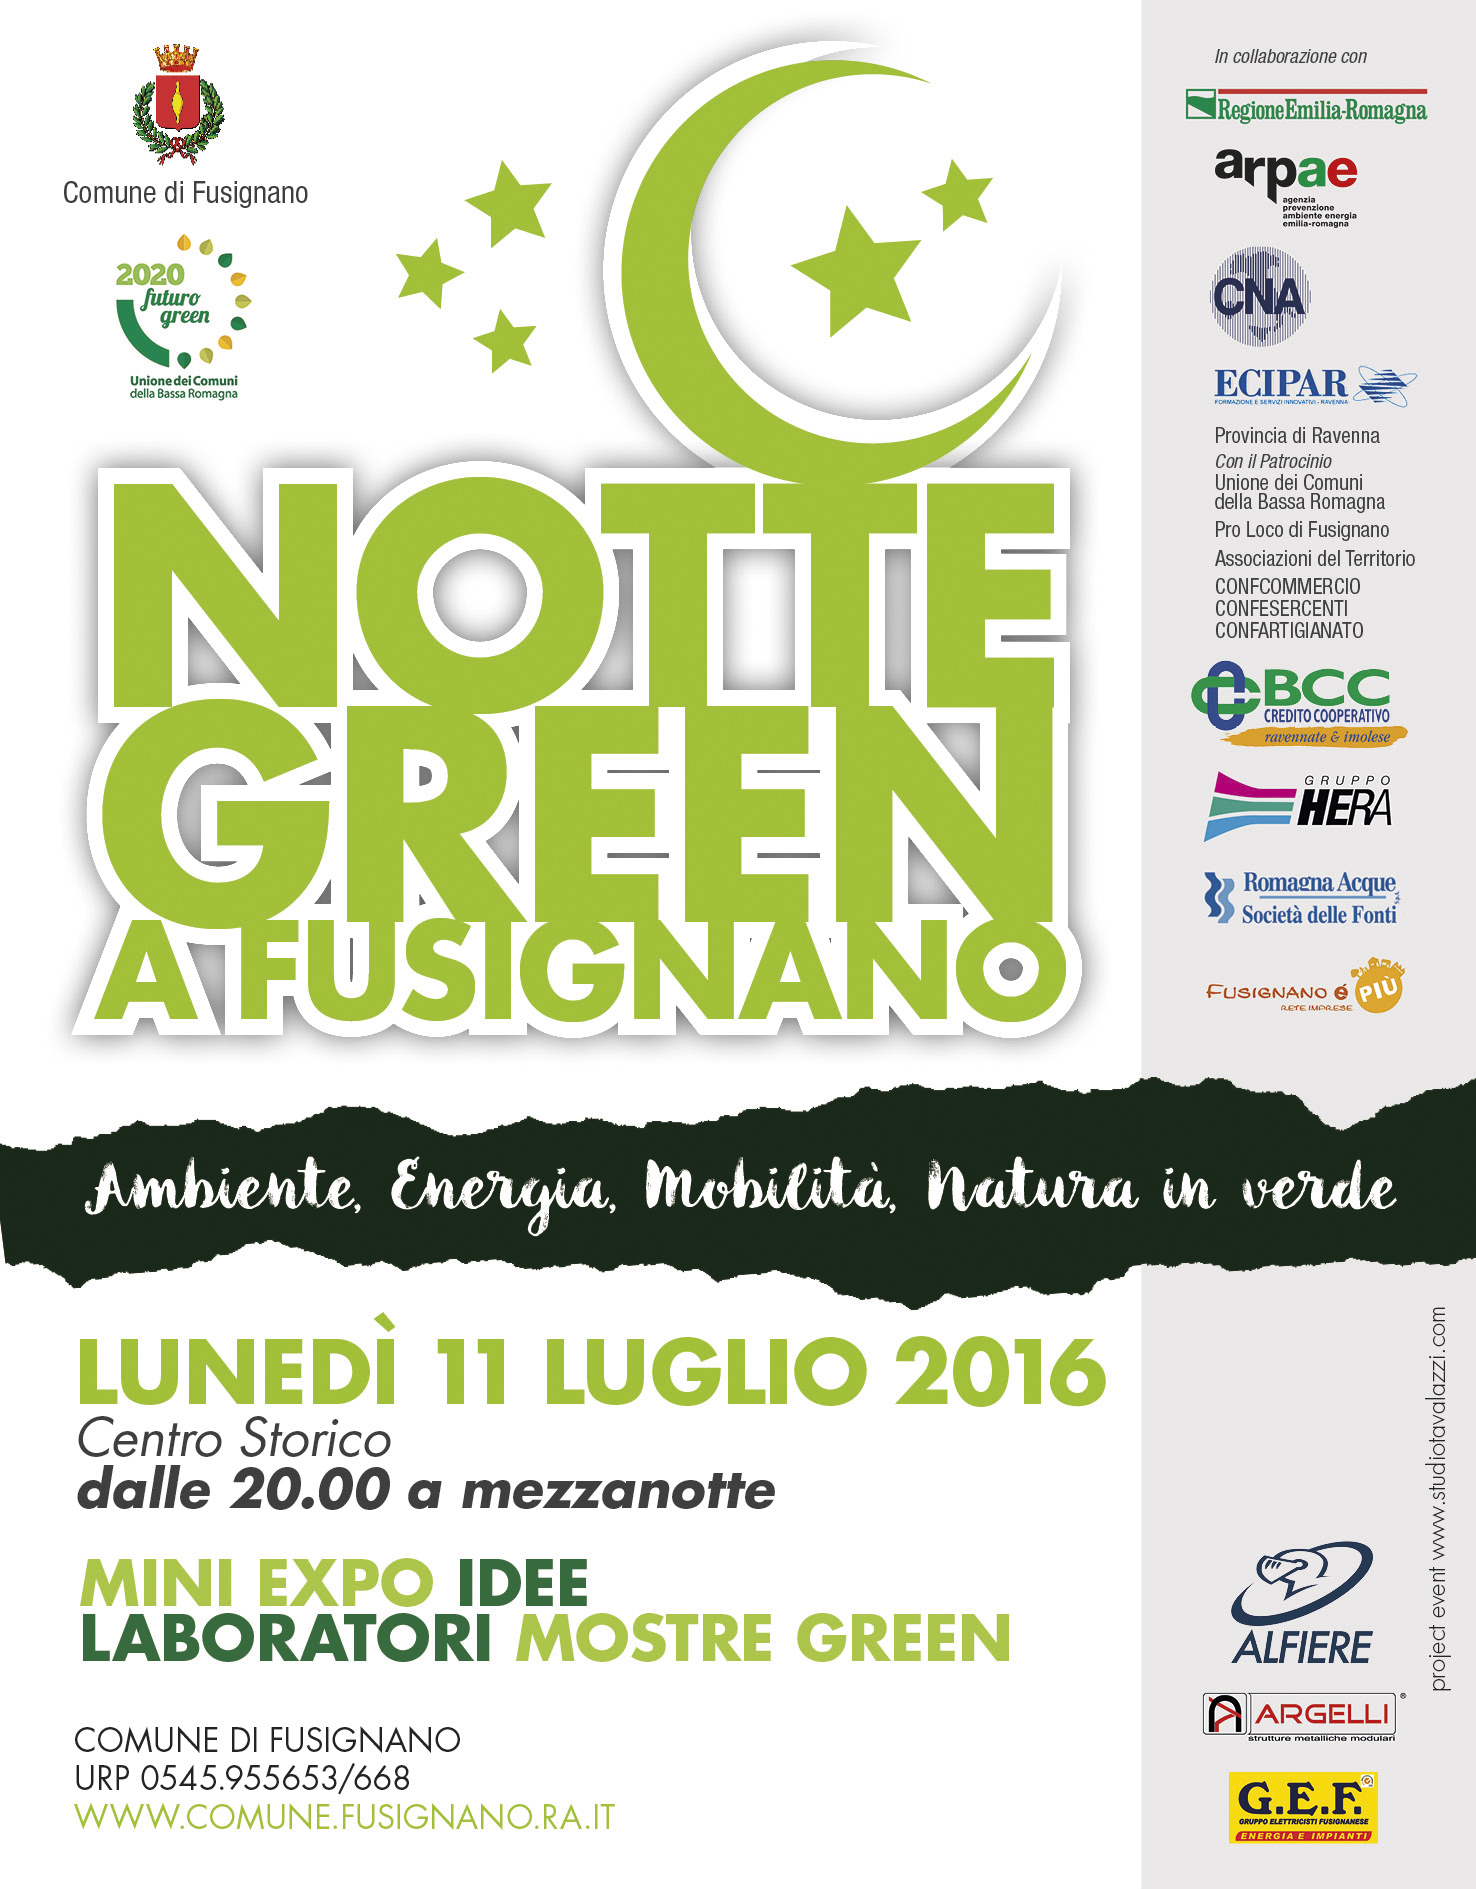 Fusignano Notte Green locandina